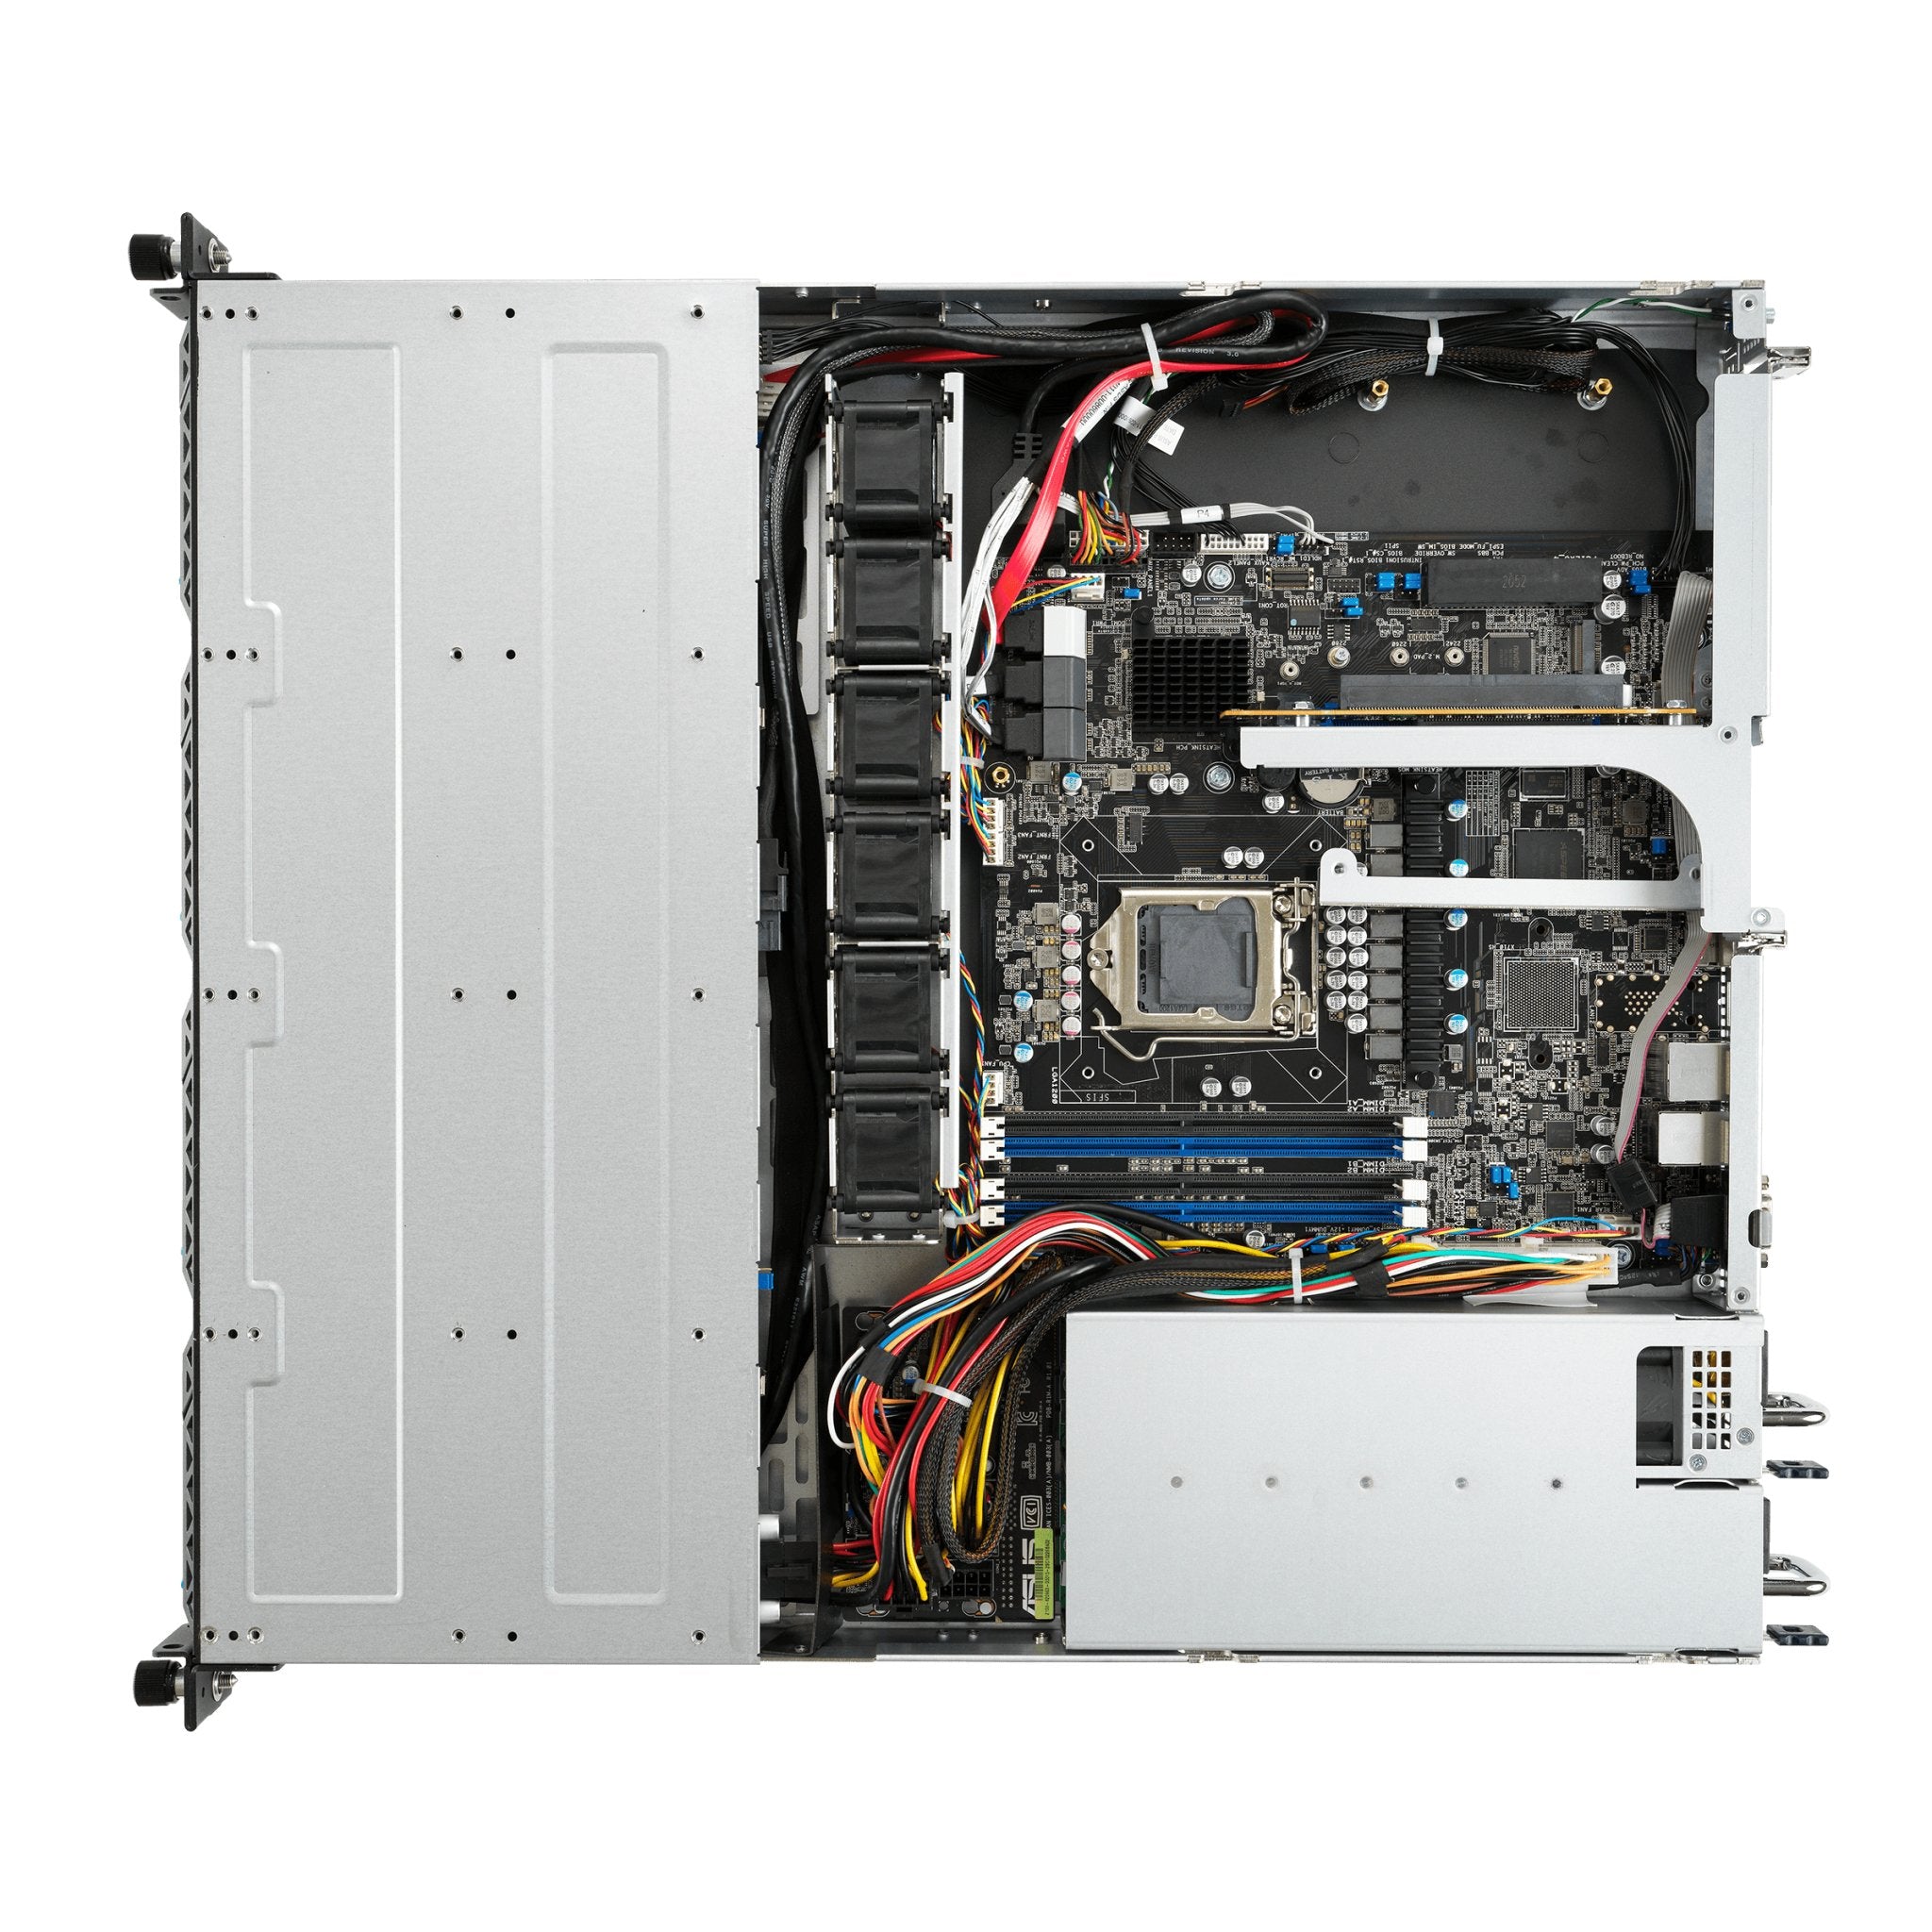 Asus RS300-E11-RS4 1u Xeon E 2300 Barebone Redundant Psu - X-Case.co.uk Ltd